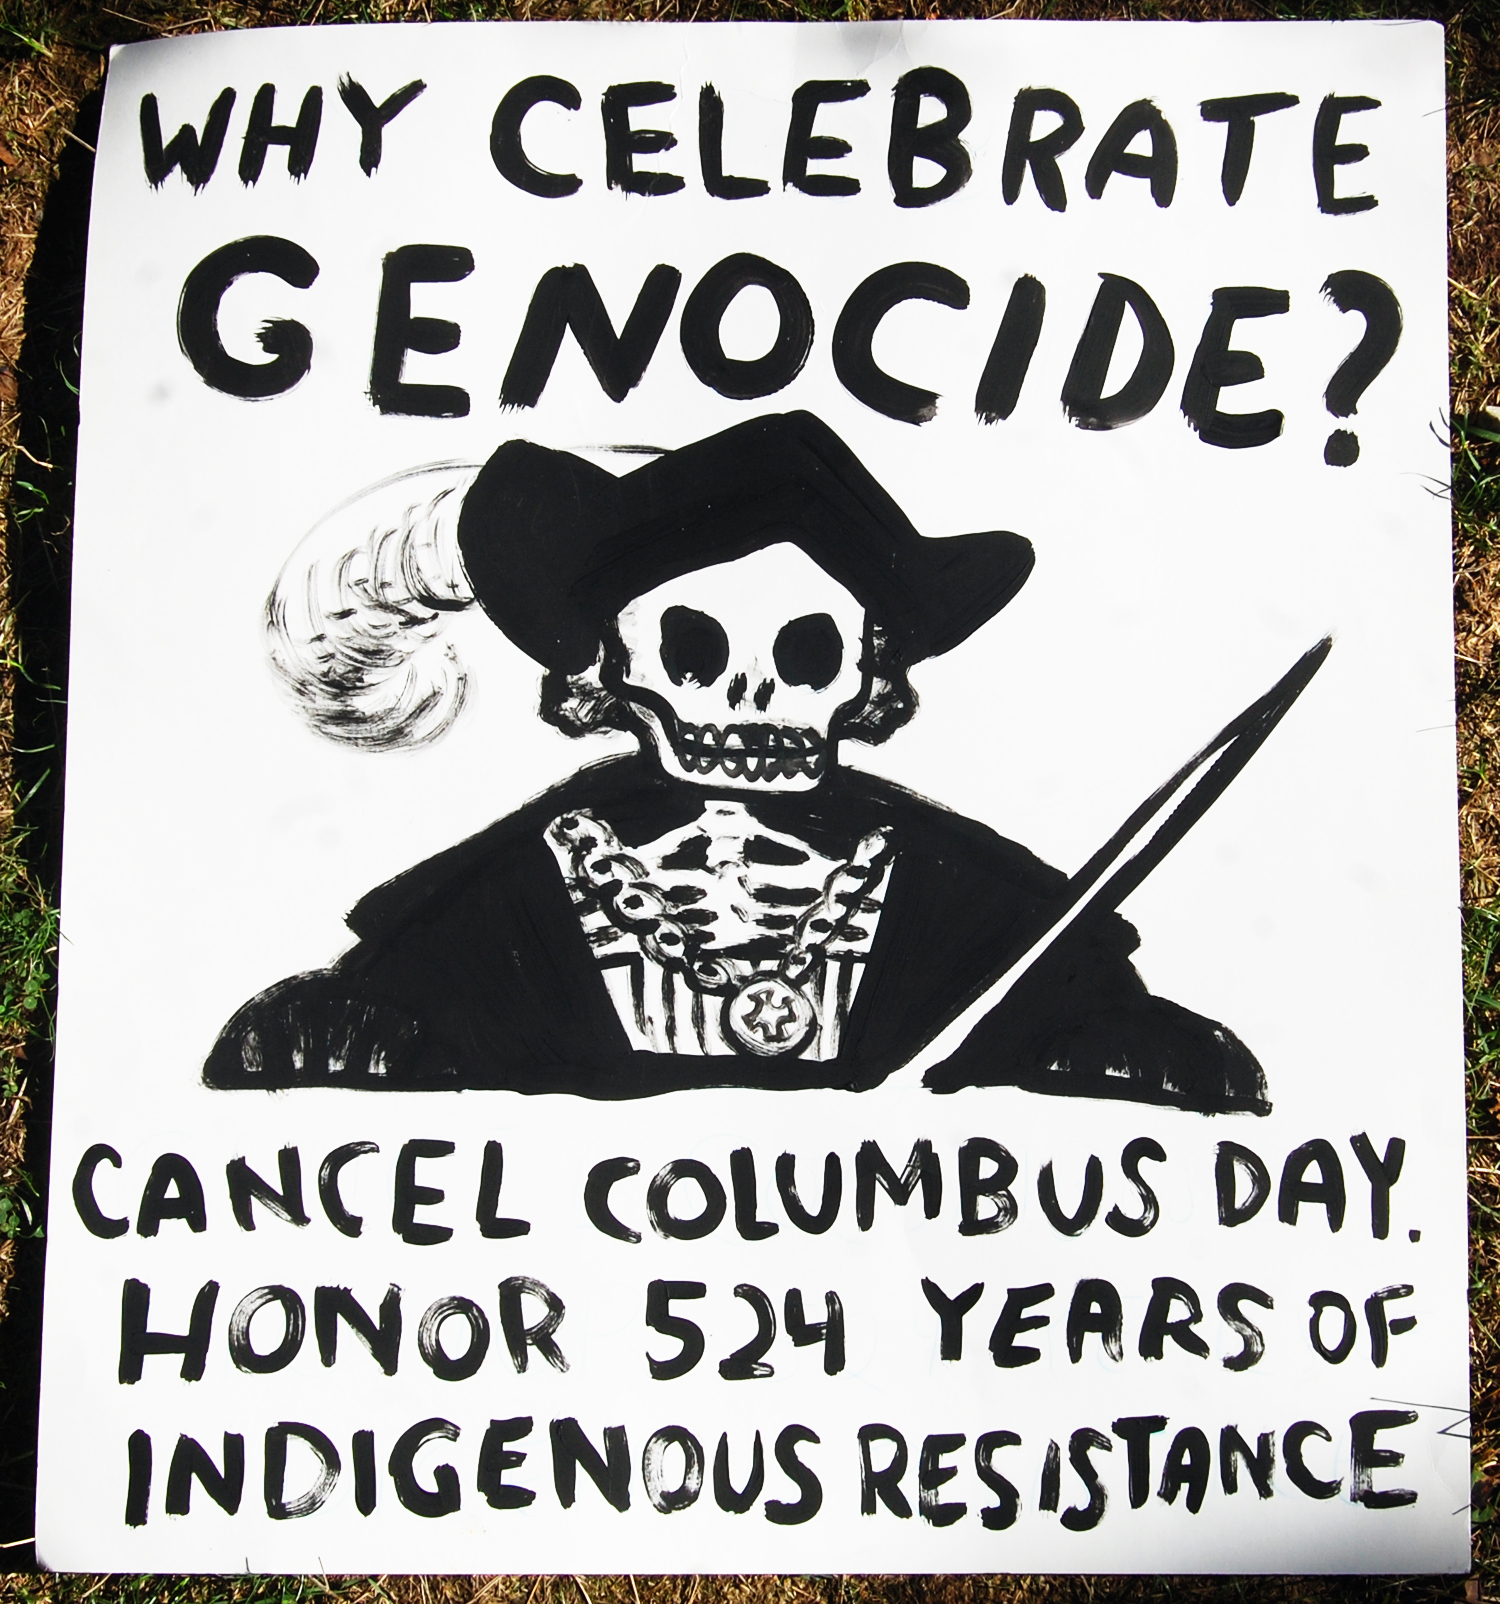 Cancel Columbus Day